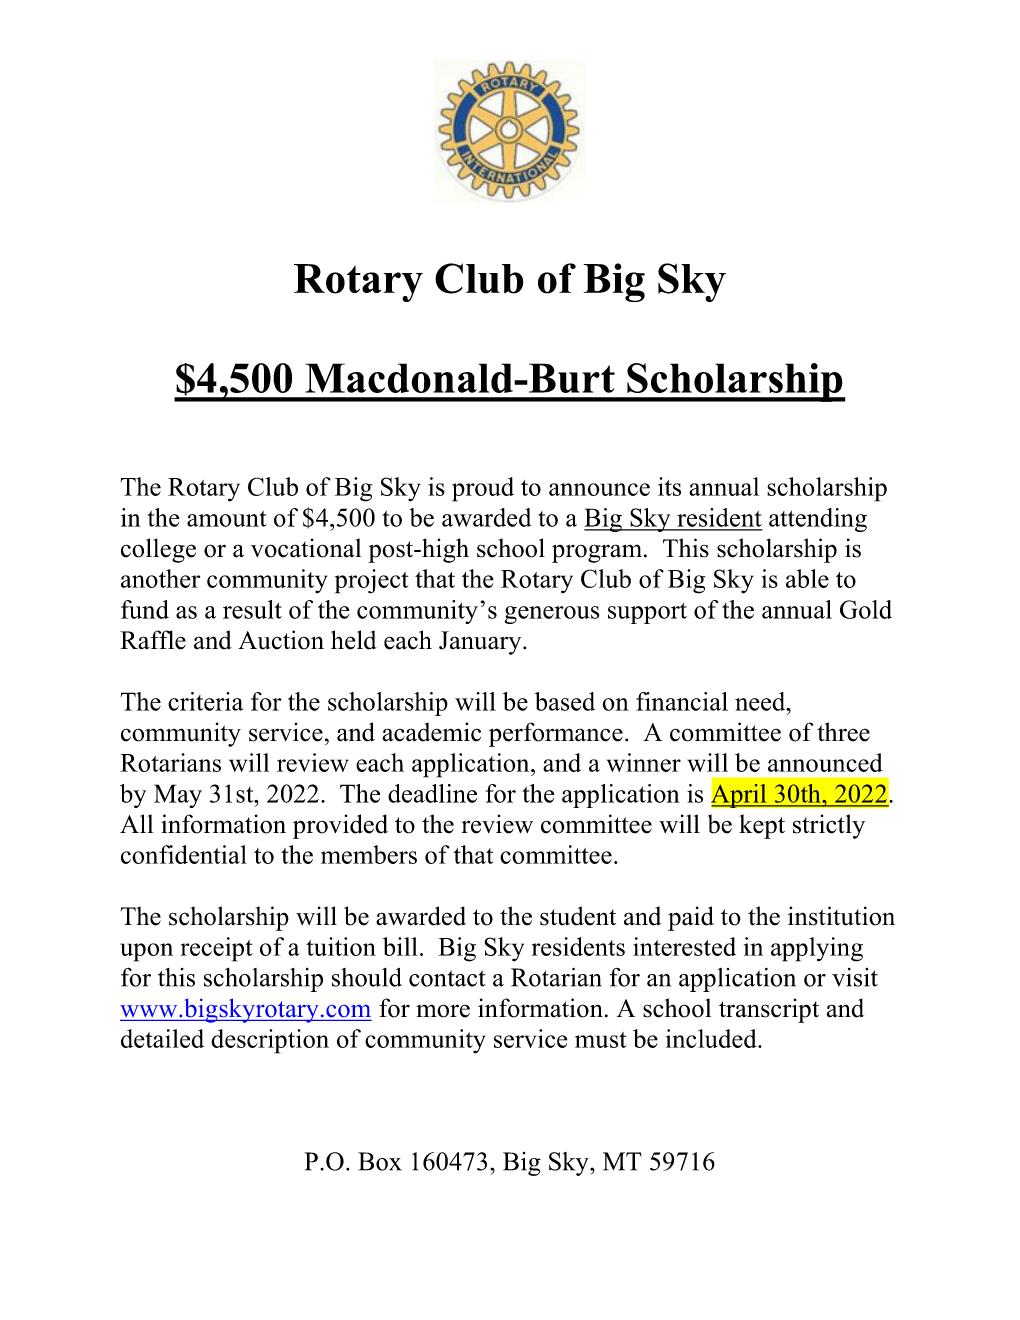 Rotary - Macdonald-Burt Scholarship | Rotary Club of Big Sky